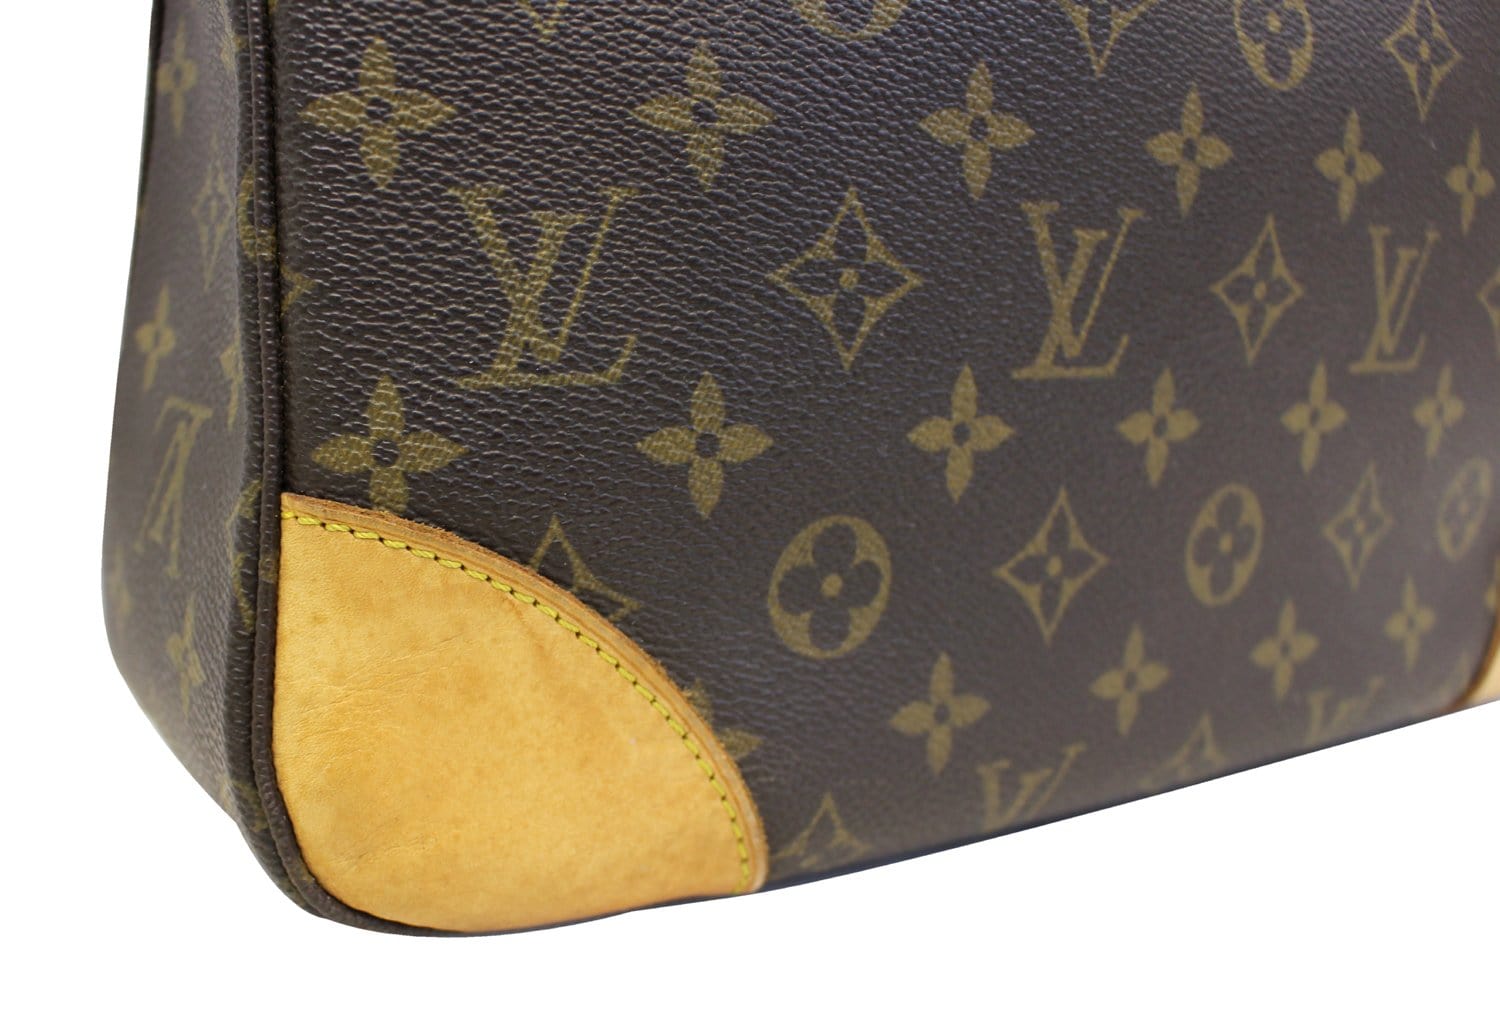 Louis Vuitton Boulogne Handbag Monogram Canvas 30 Brown 224646253